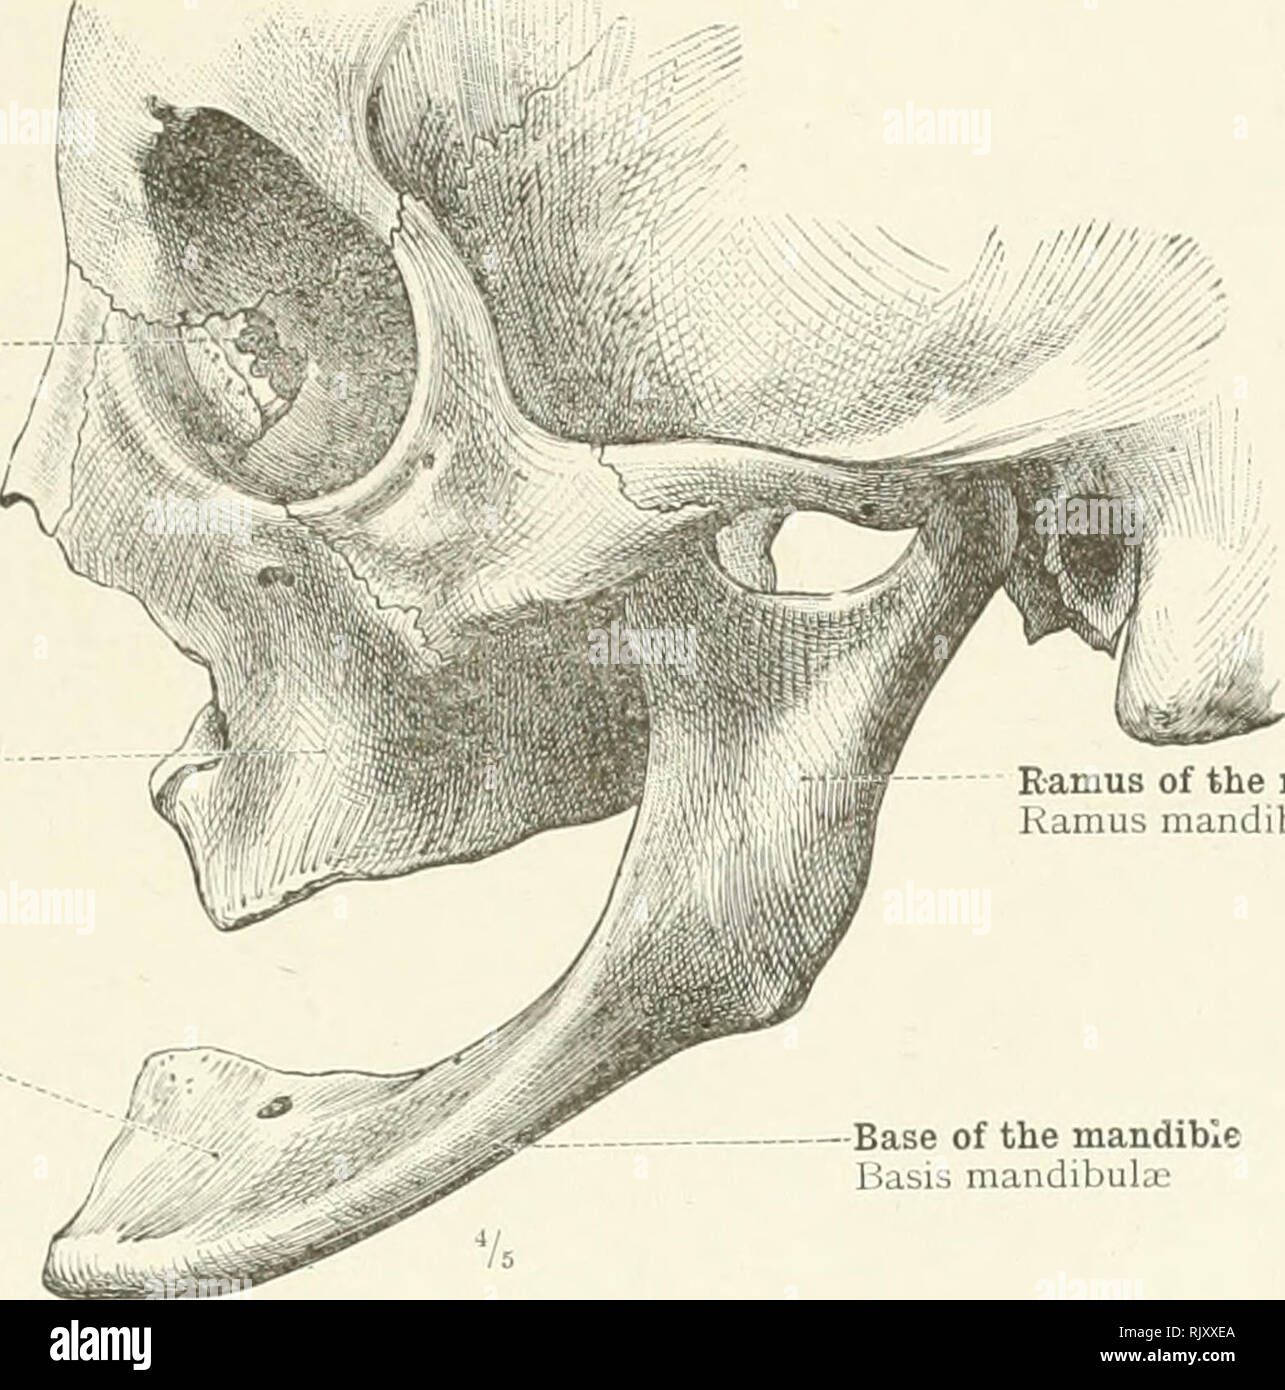 Ramus mandibulae